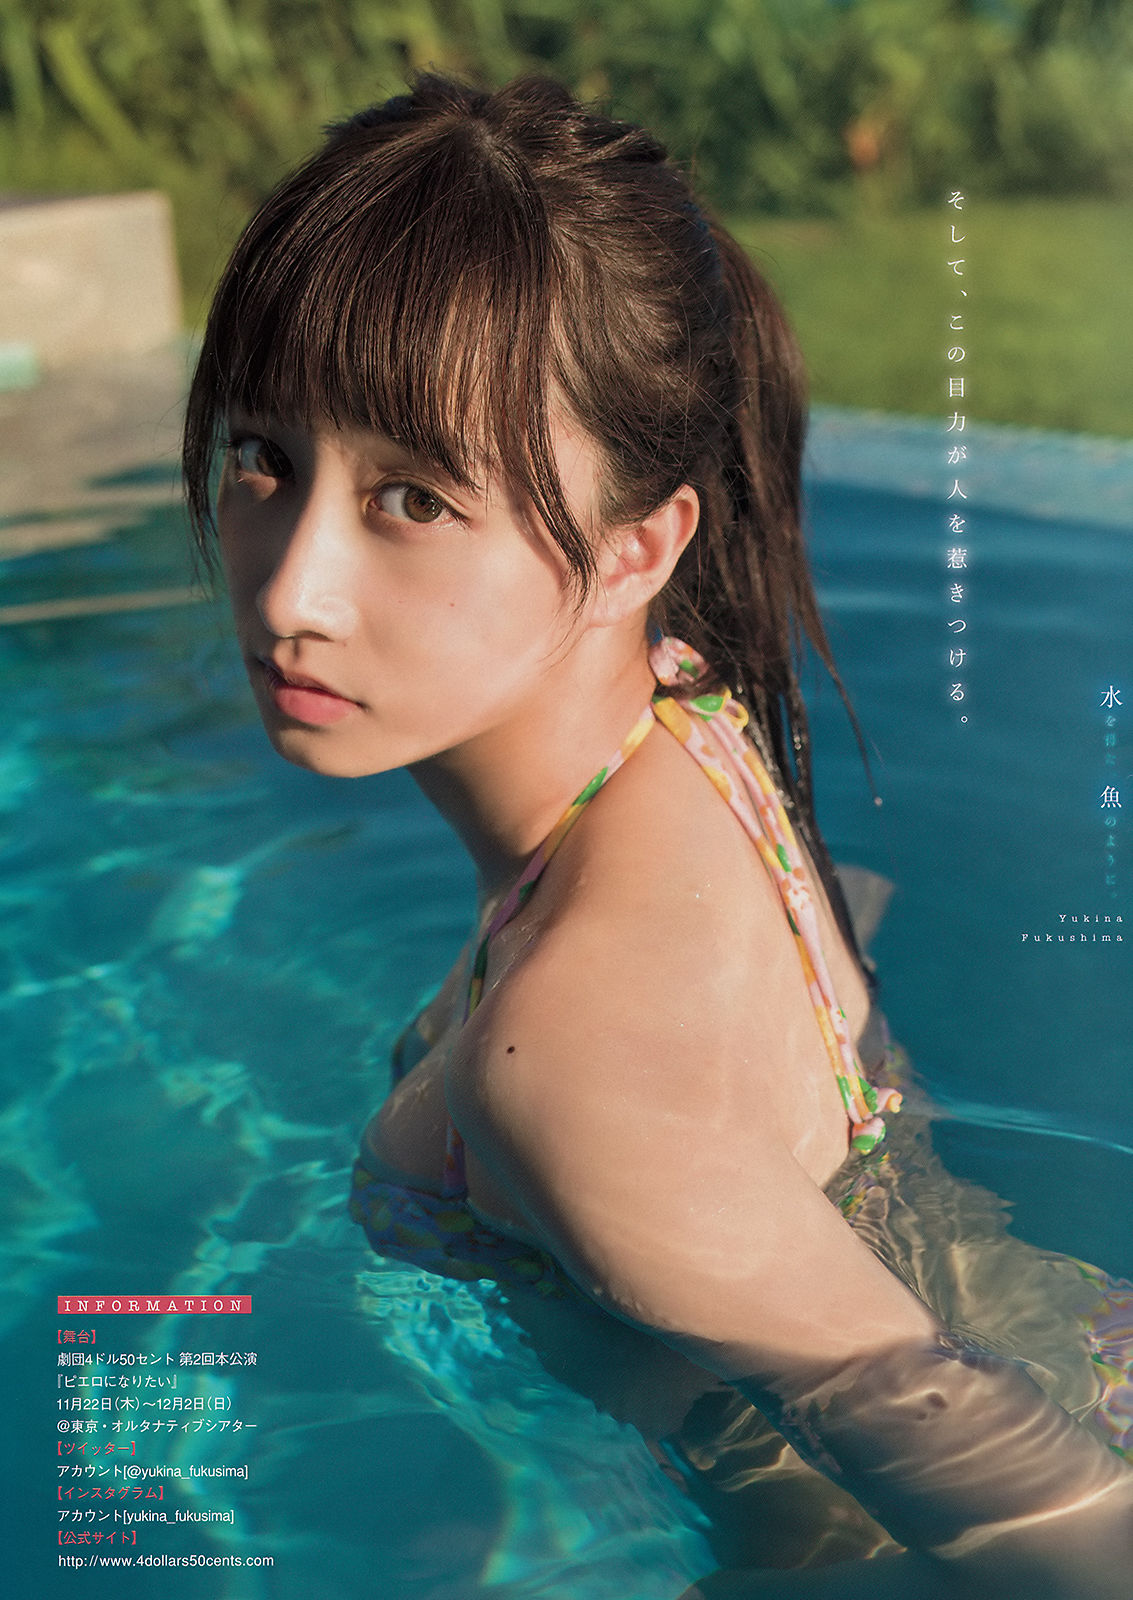 [Young Magazine]美胸美乳:福岛雪菜高品质写真作品个人分享(13P)